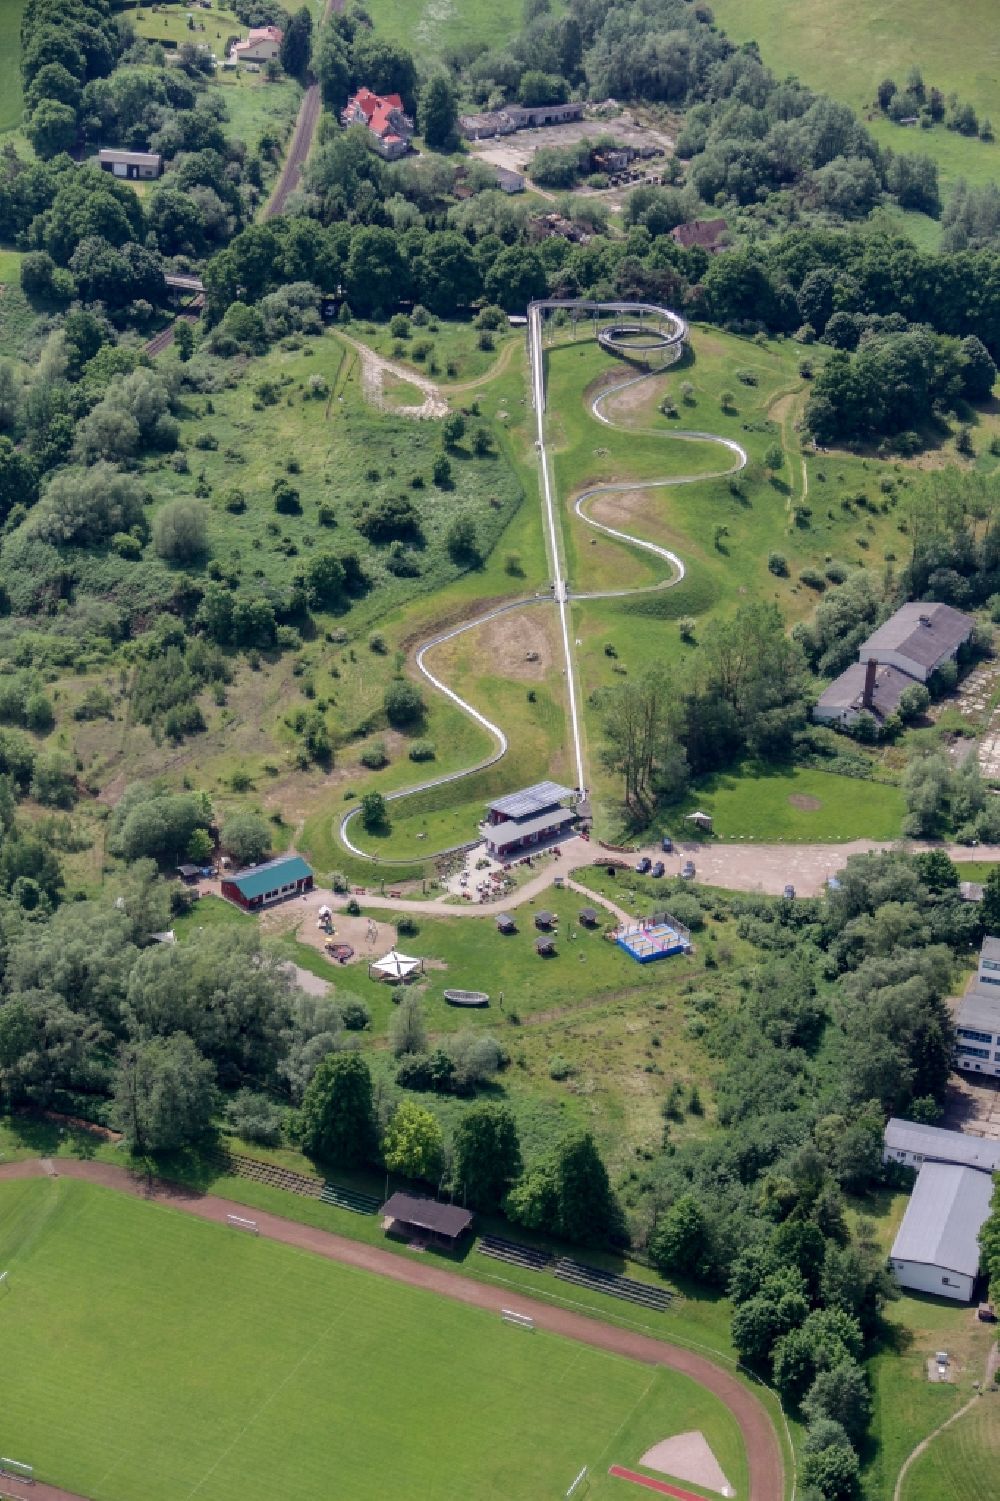 Aerial photograph Bad Doberan - Sport- and Leisure Centre of toboggan run in Bad Doberan in the state Mecklenburg - Western Pomerania, Germany